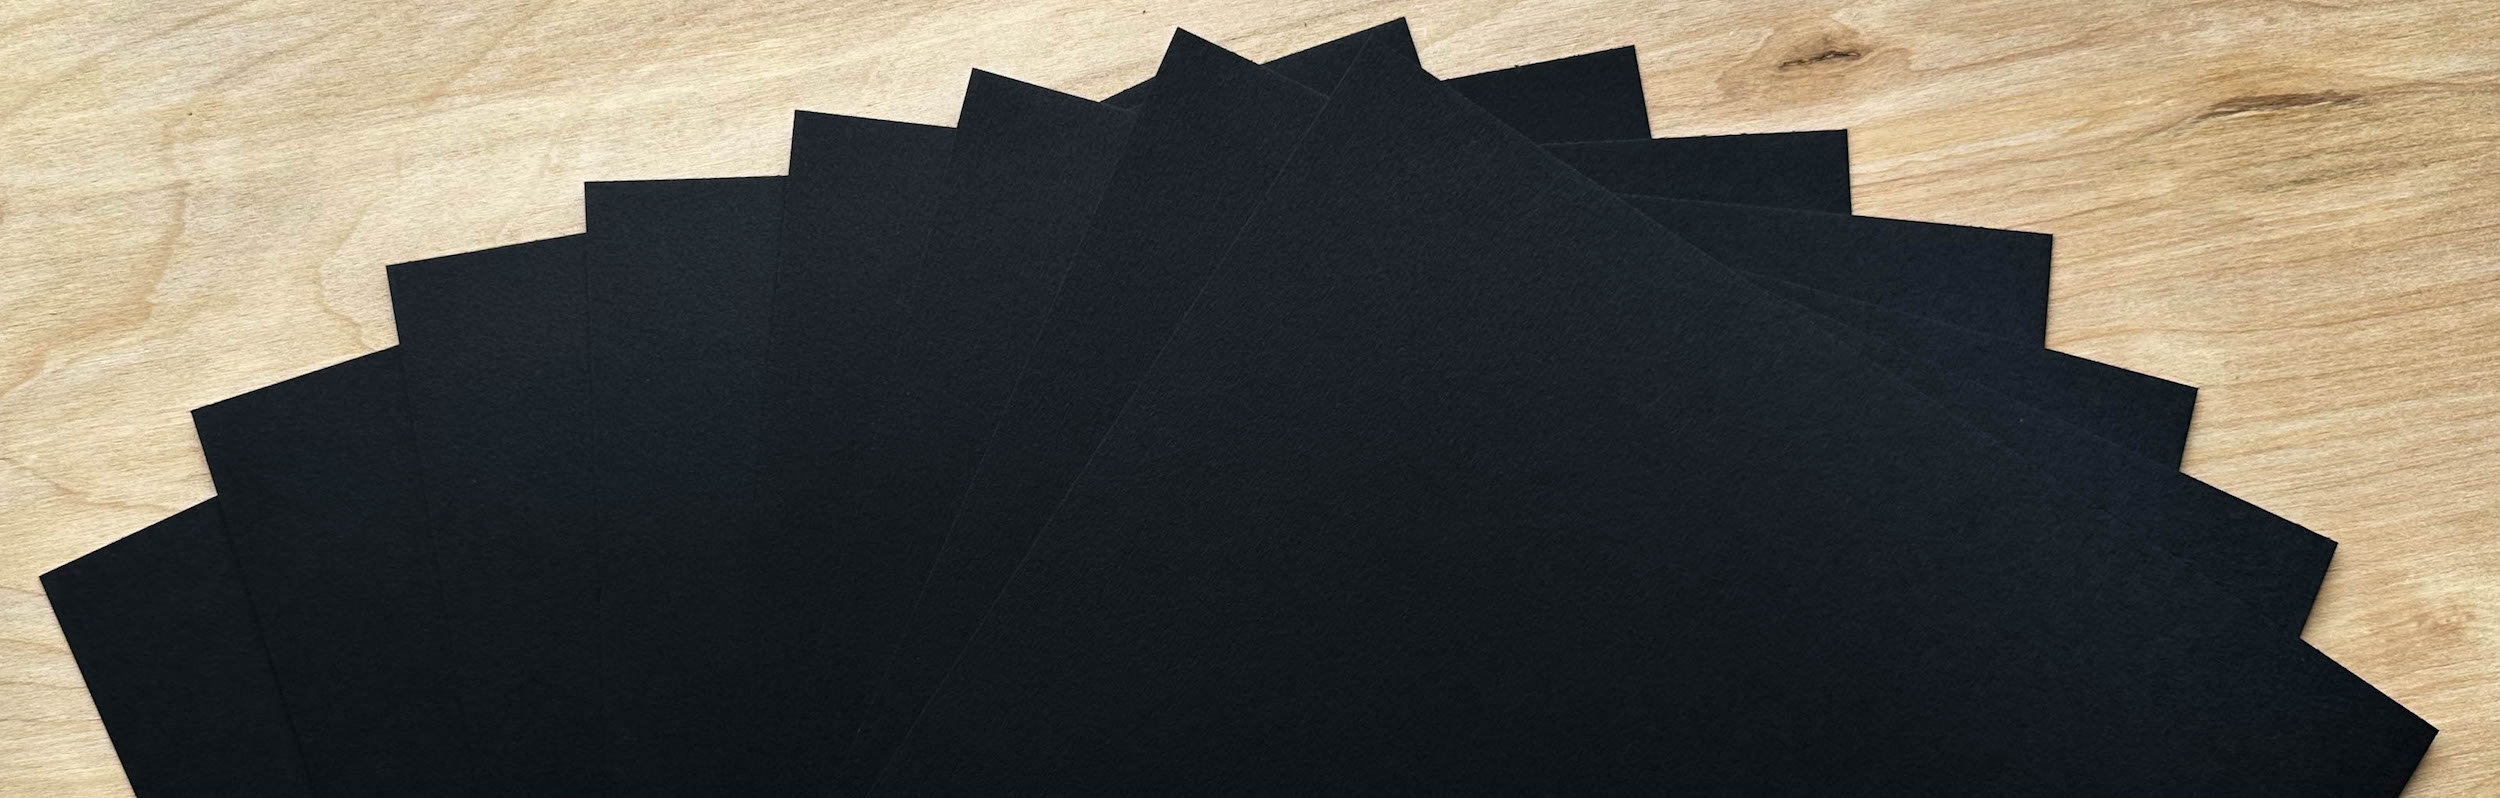 Cardstock Warehouse Paper Company Sirio Ultra Black Cardstock from Cardstock Warehouse 8.5 x 11 - 104 lb. Cover - 25 Sheets